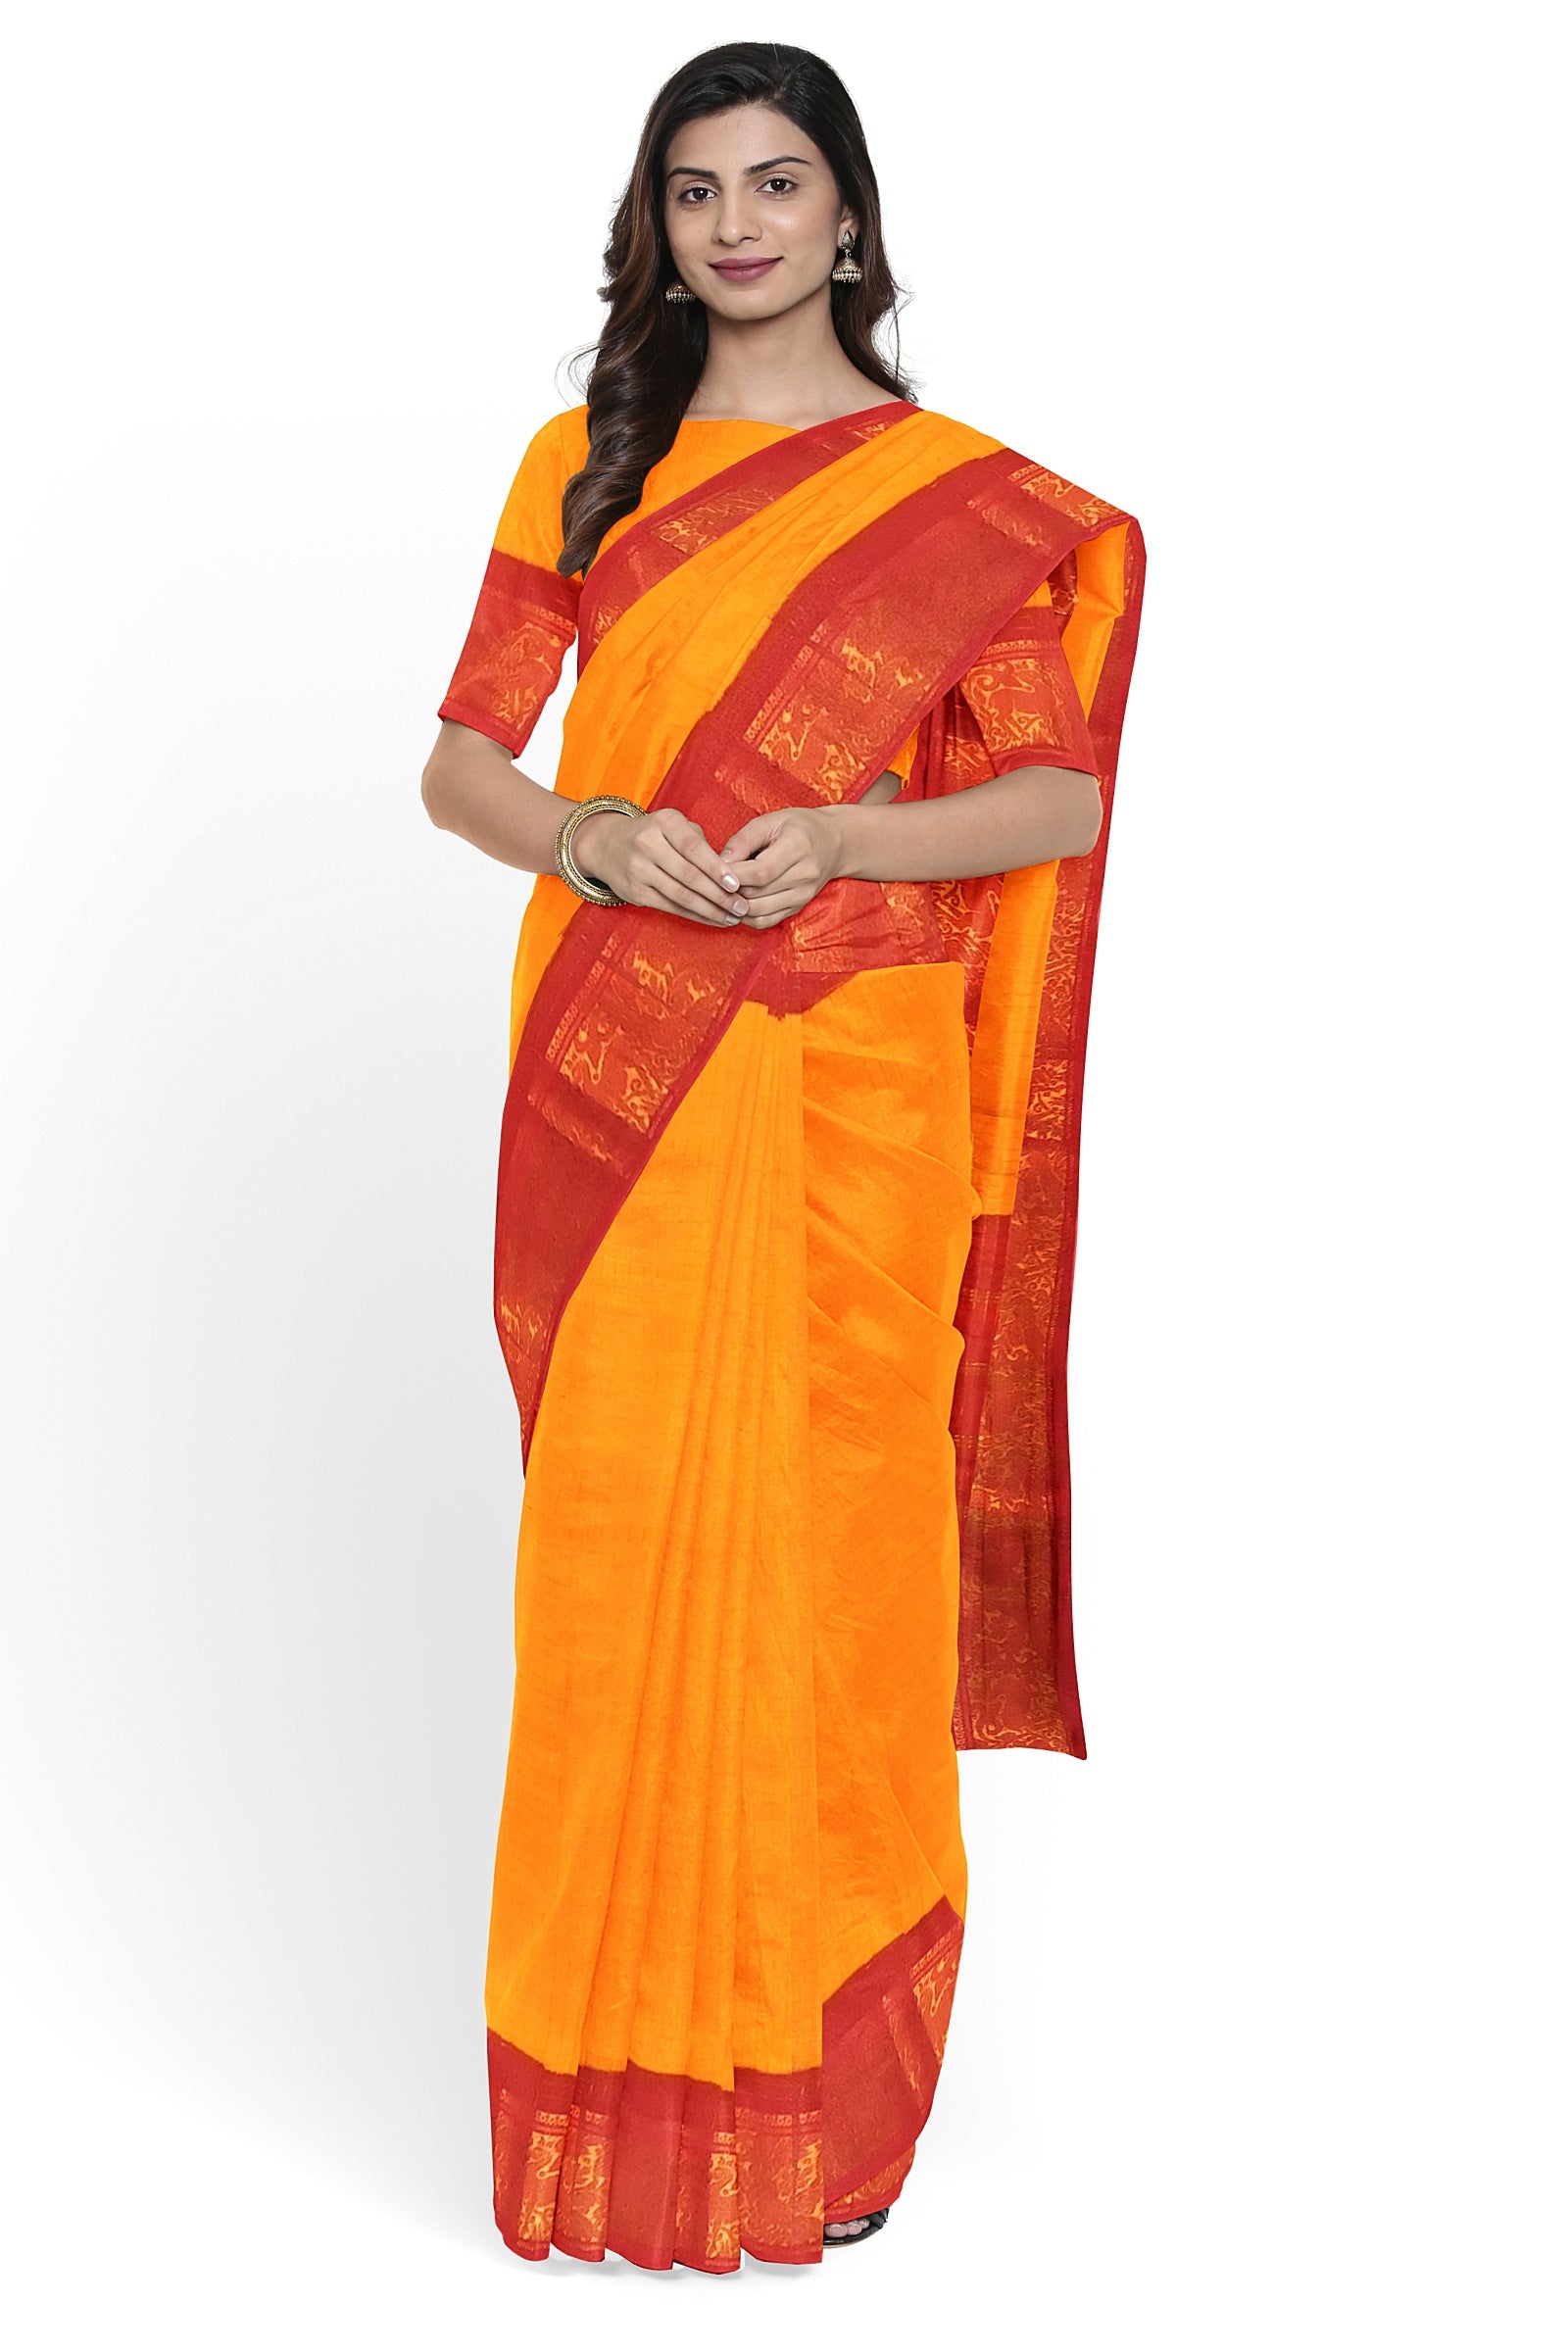 Madurai Sungudi Cotton Saree, Technics : Machine Made, Occasion : Casual  Wear at Rs 650 / Piece in Kanchipuram